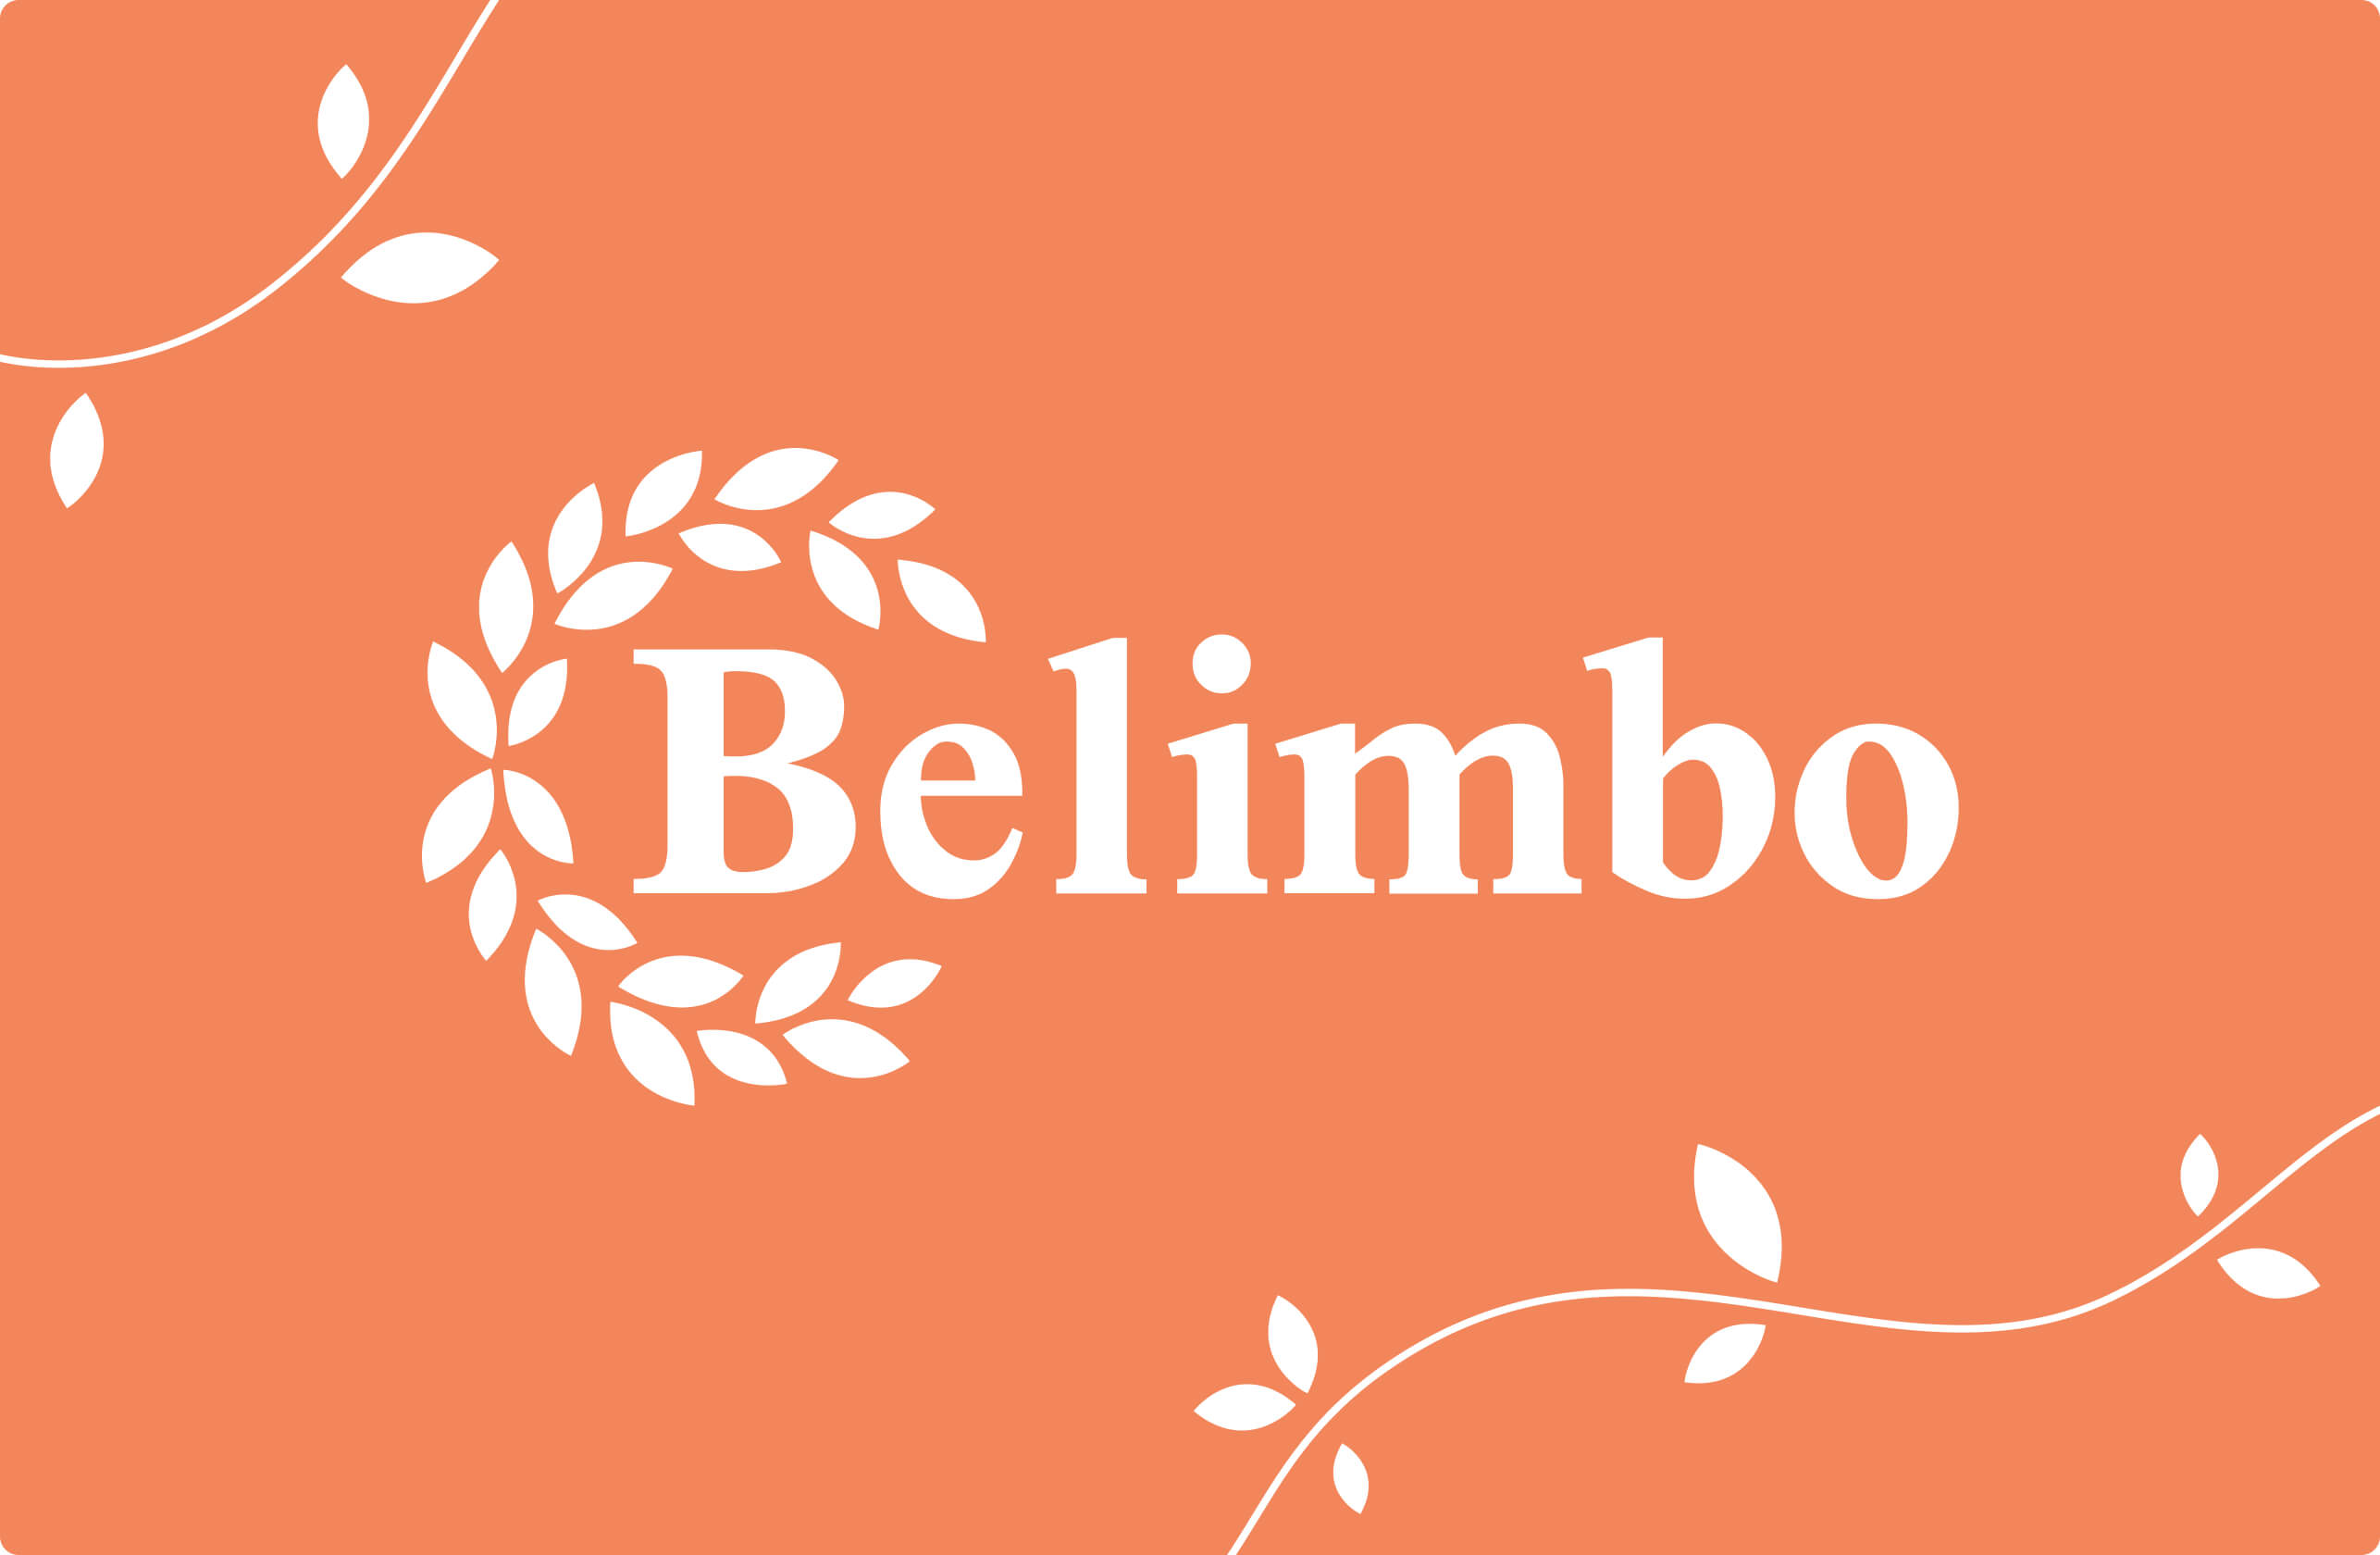 Belimbo